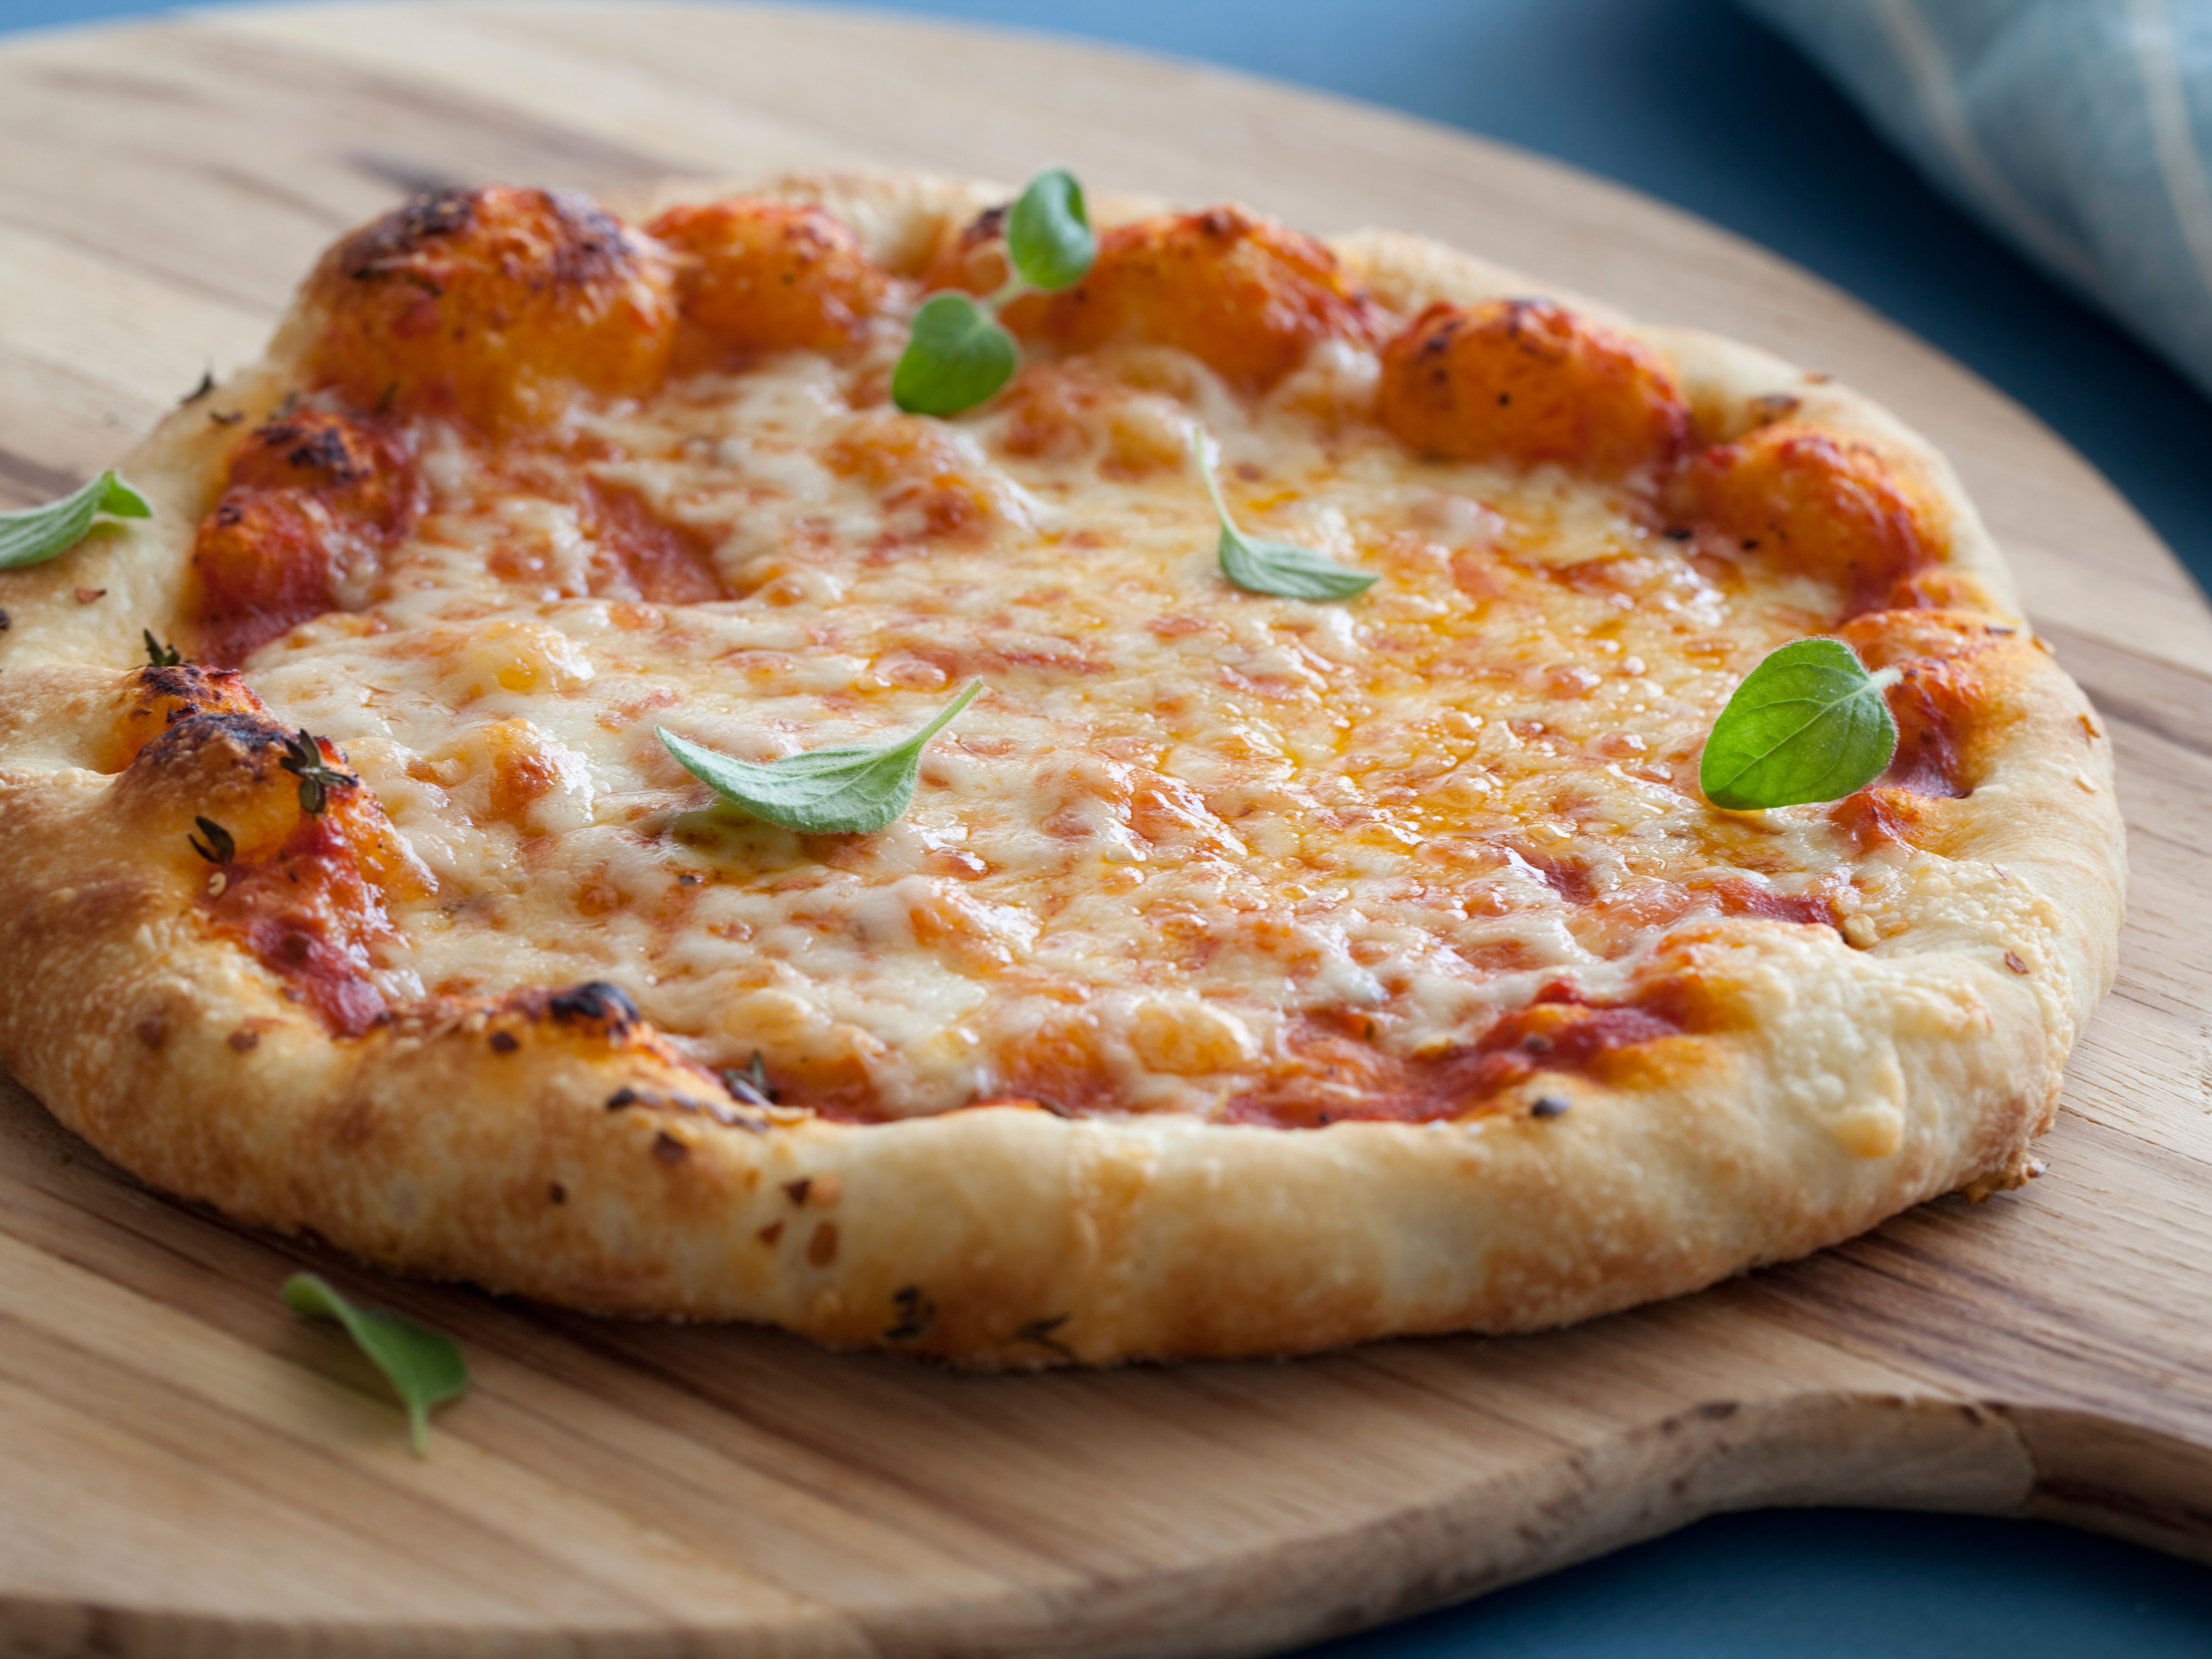 Sheet-Pan Pizza Dough Recipe, Food Network Kitchen